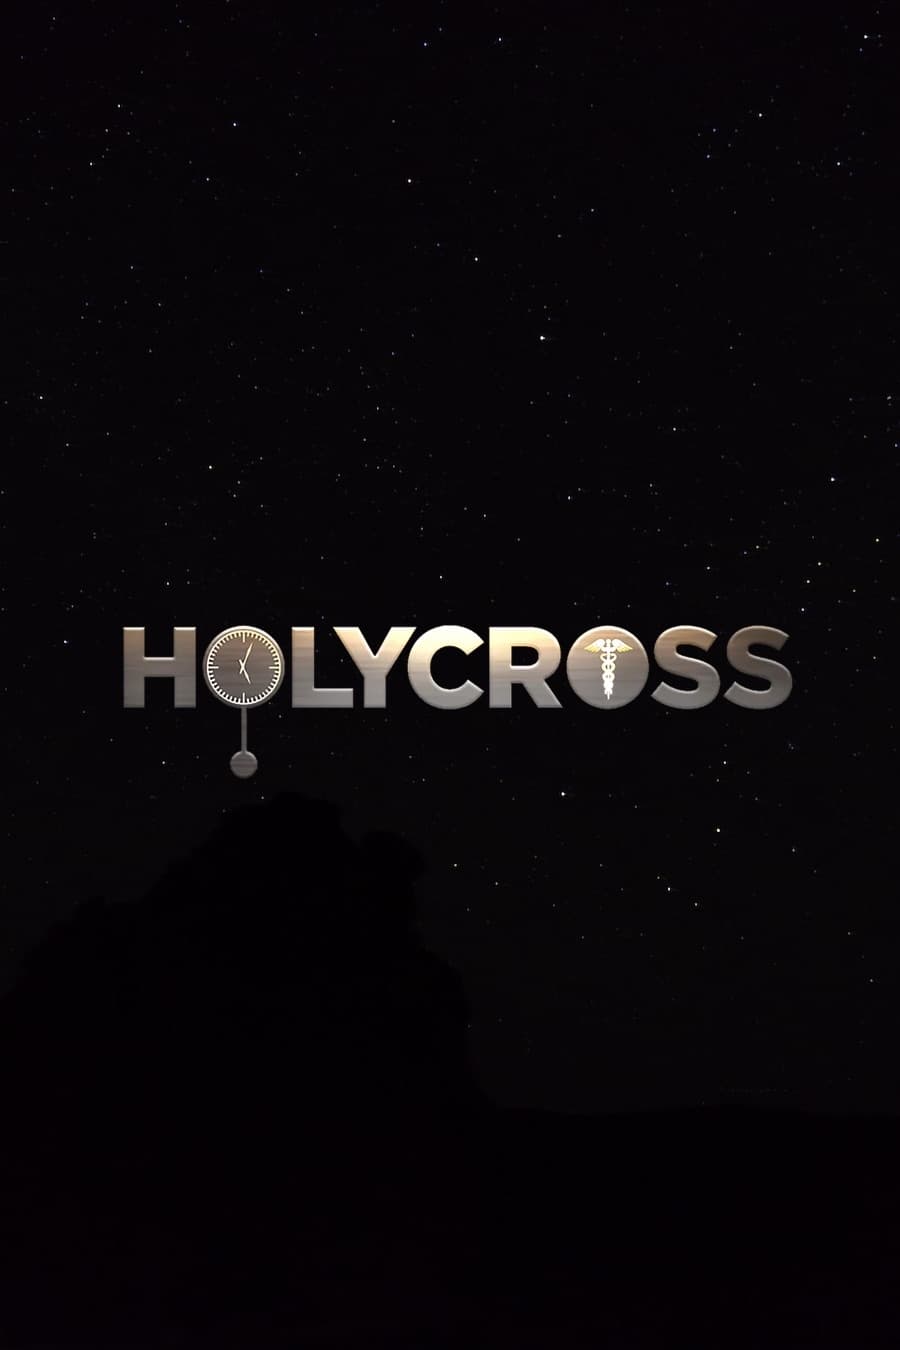 Holycross